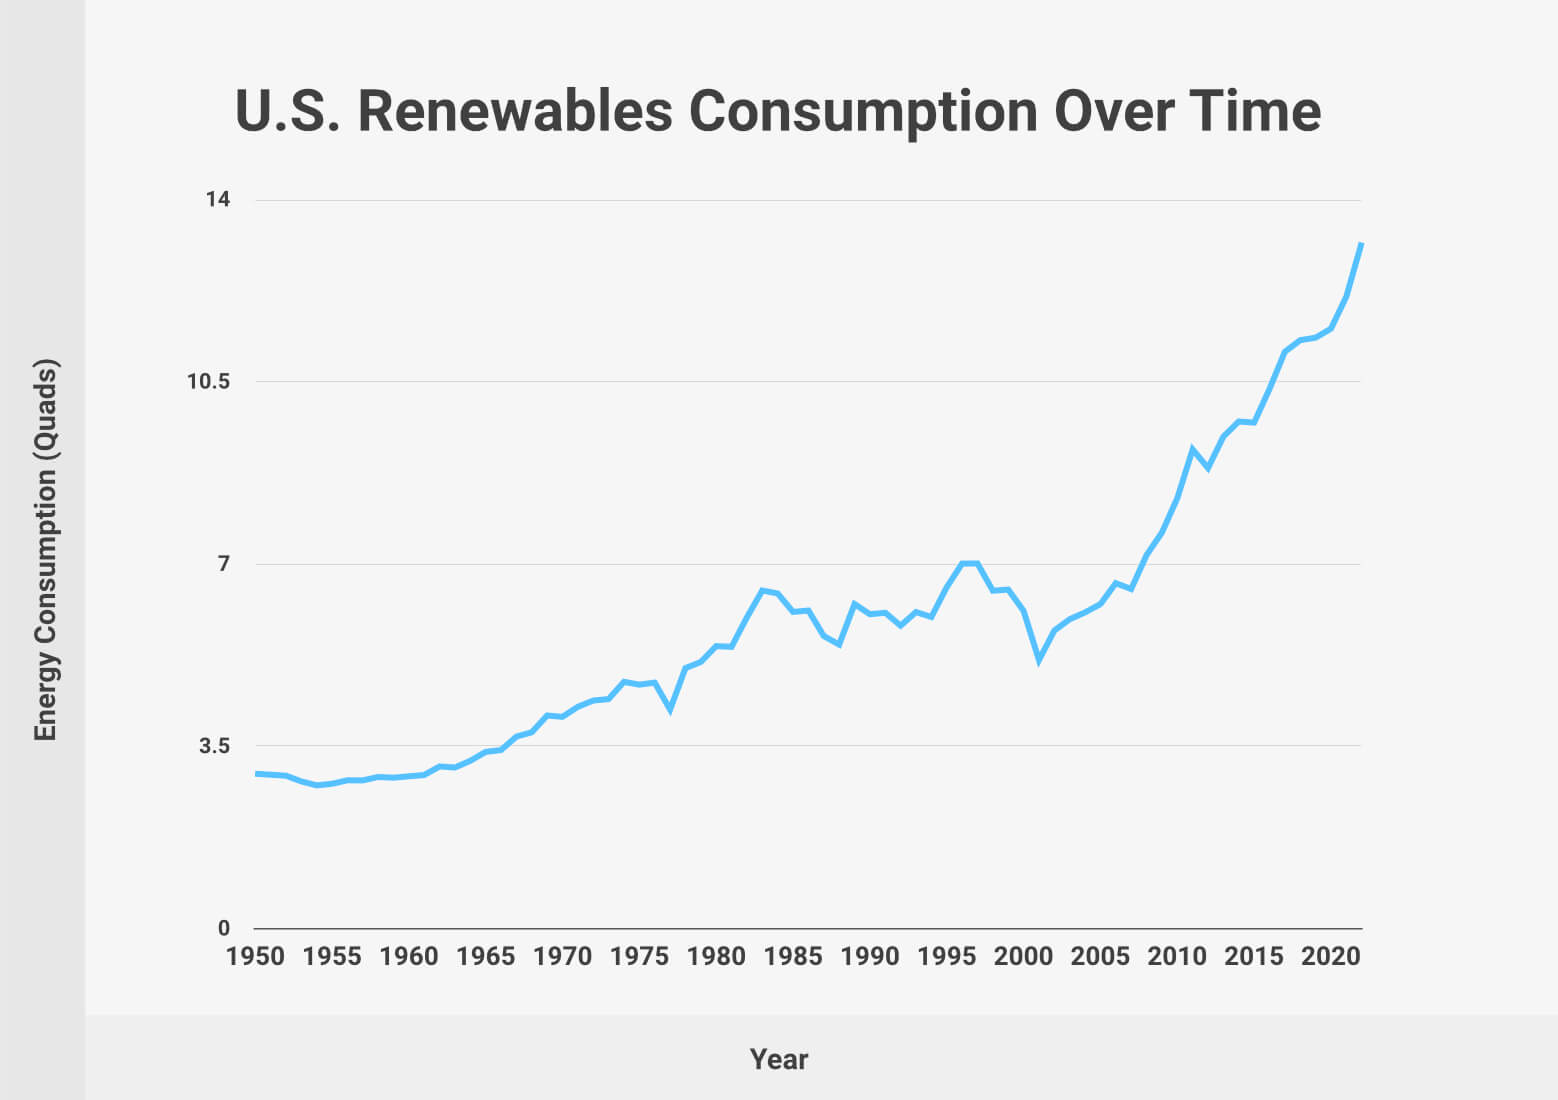 U.S. Renewable Energy Consumption Over Time